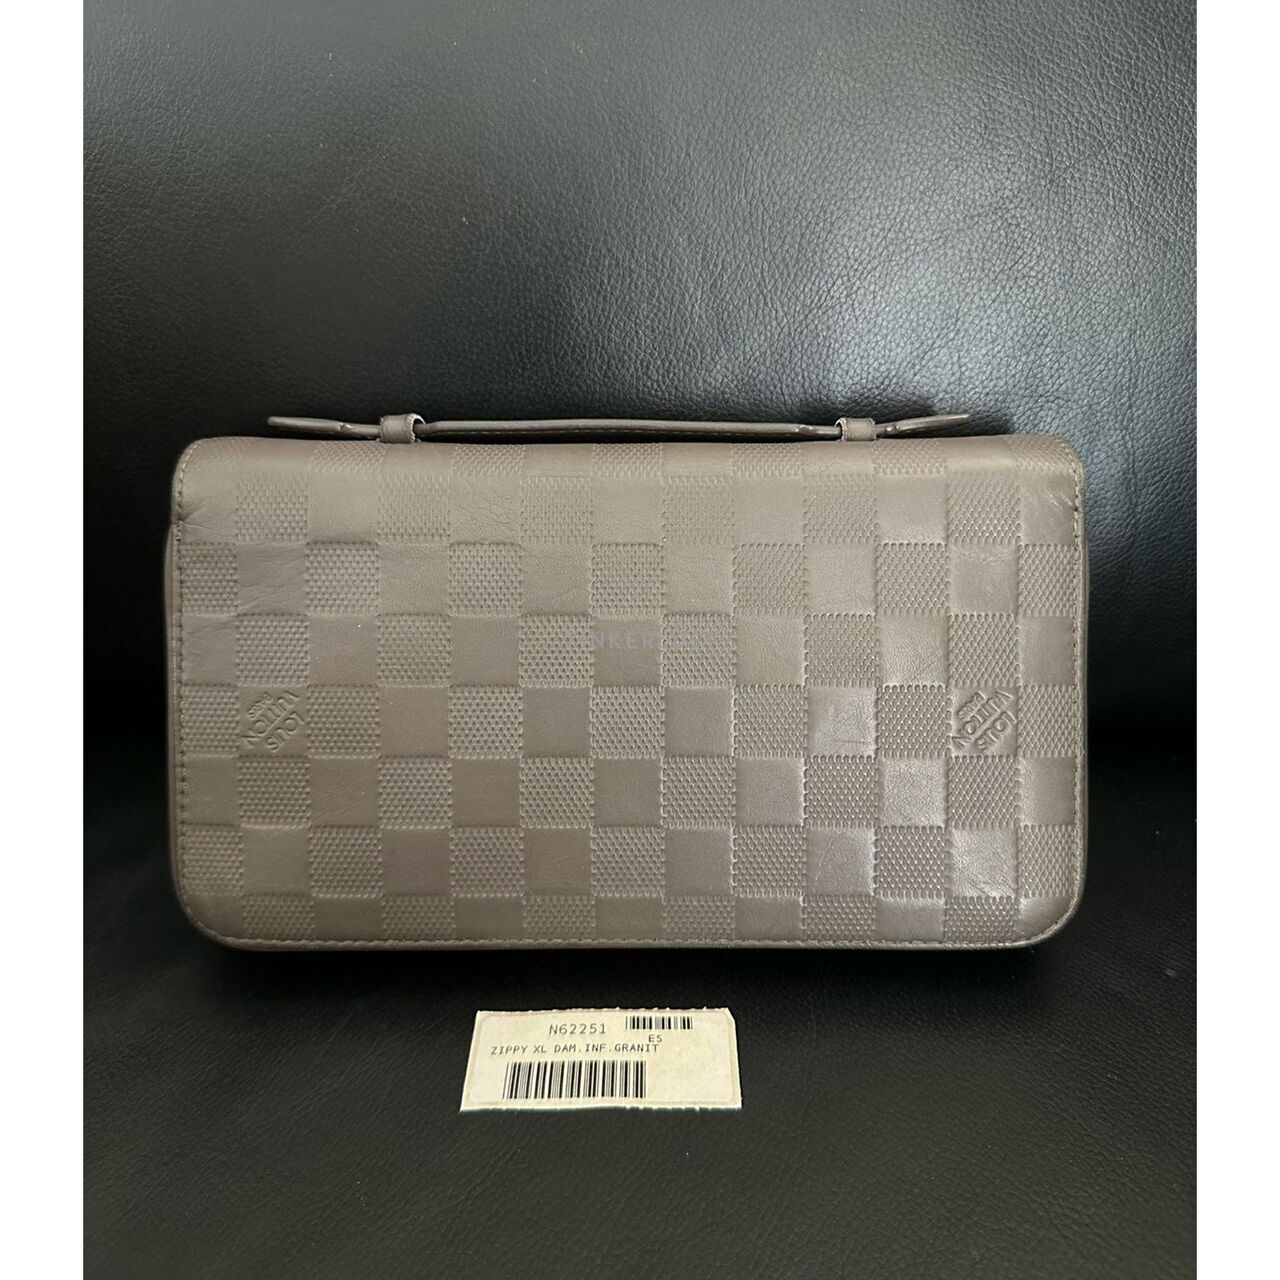 Louis Vuitton Zippy XL Damier Infini Granit Wallet